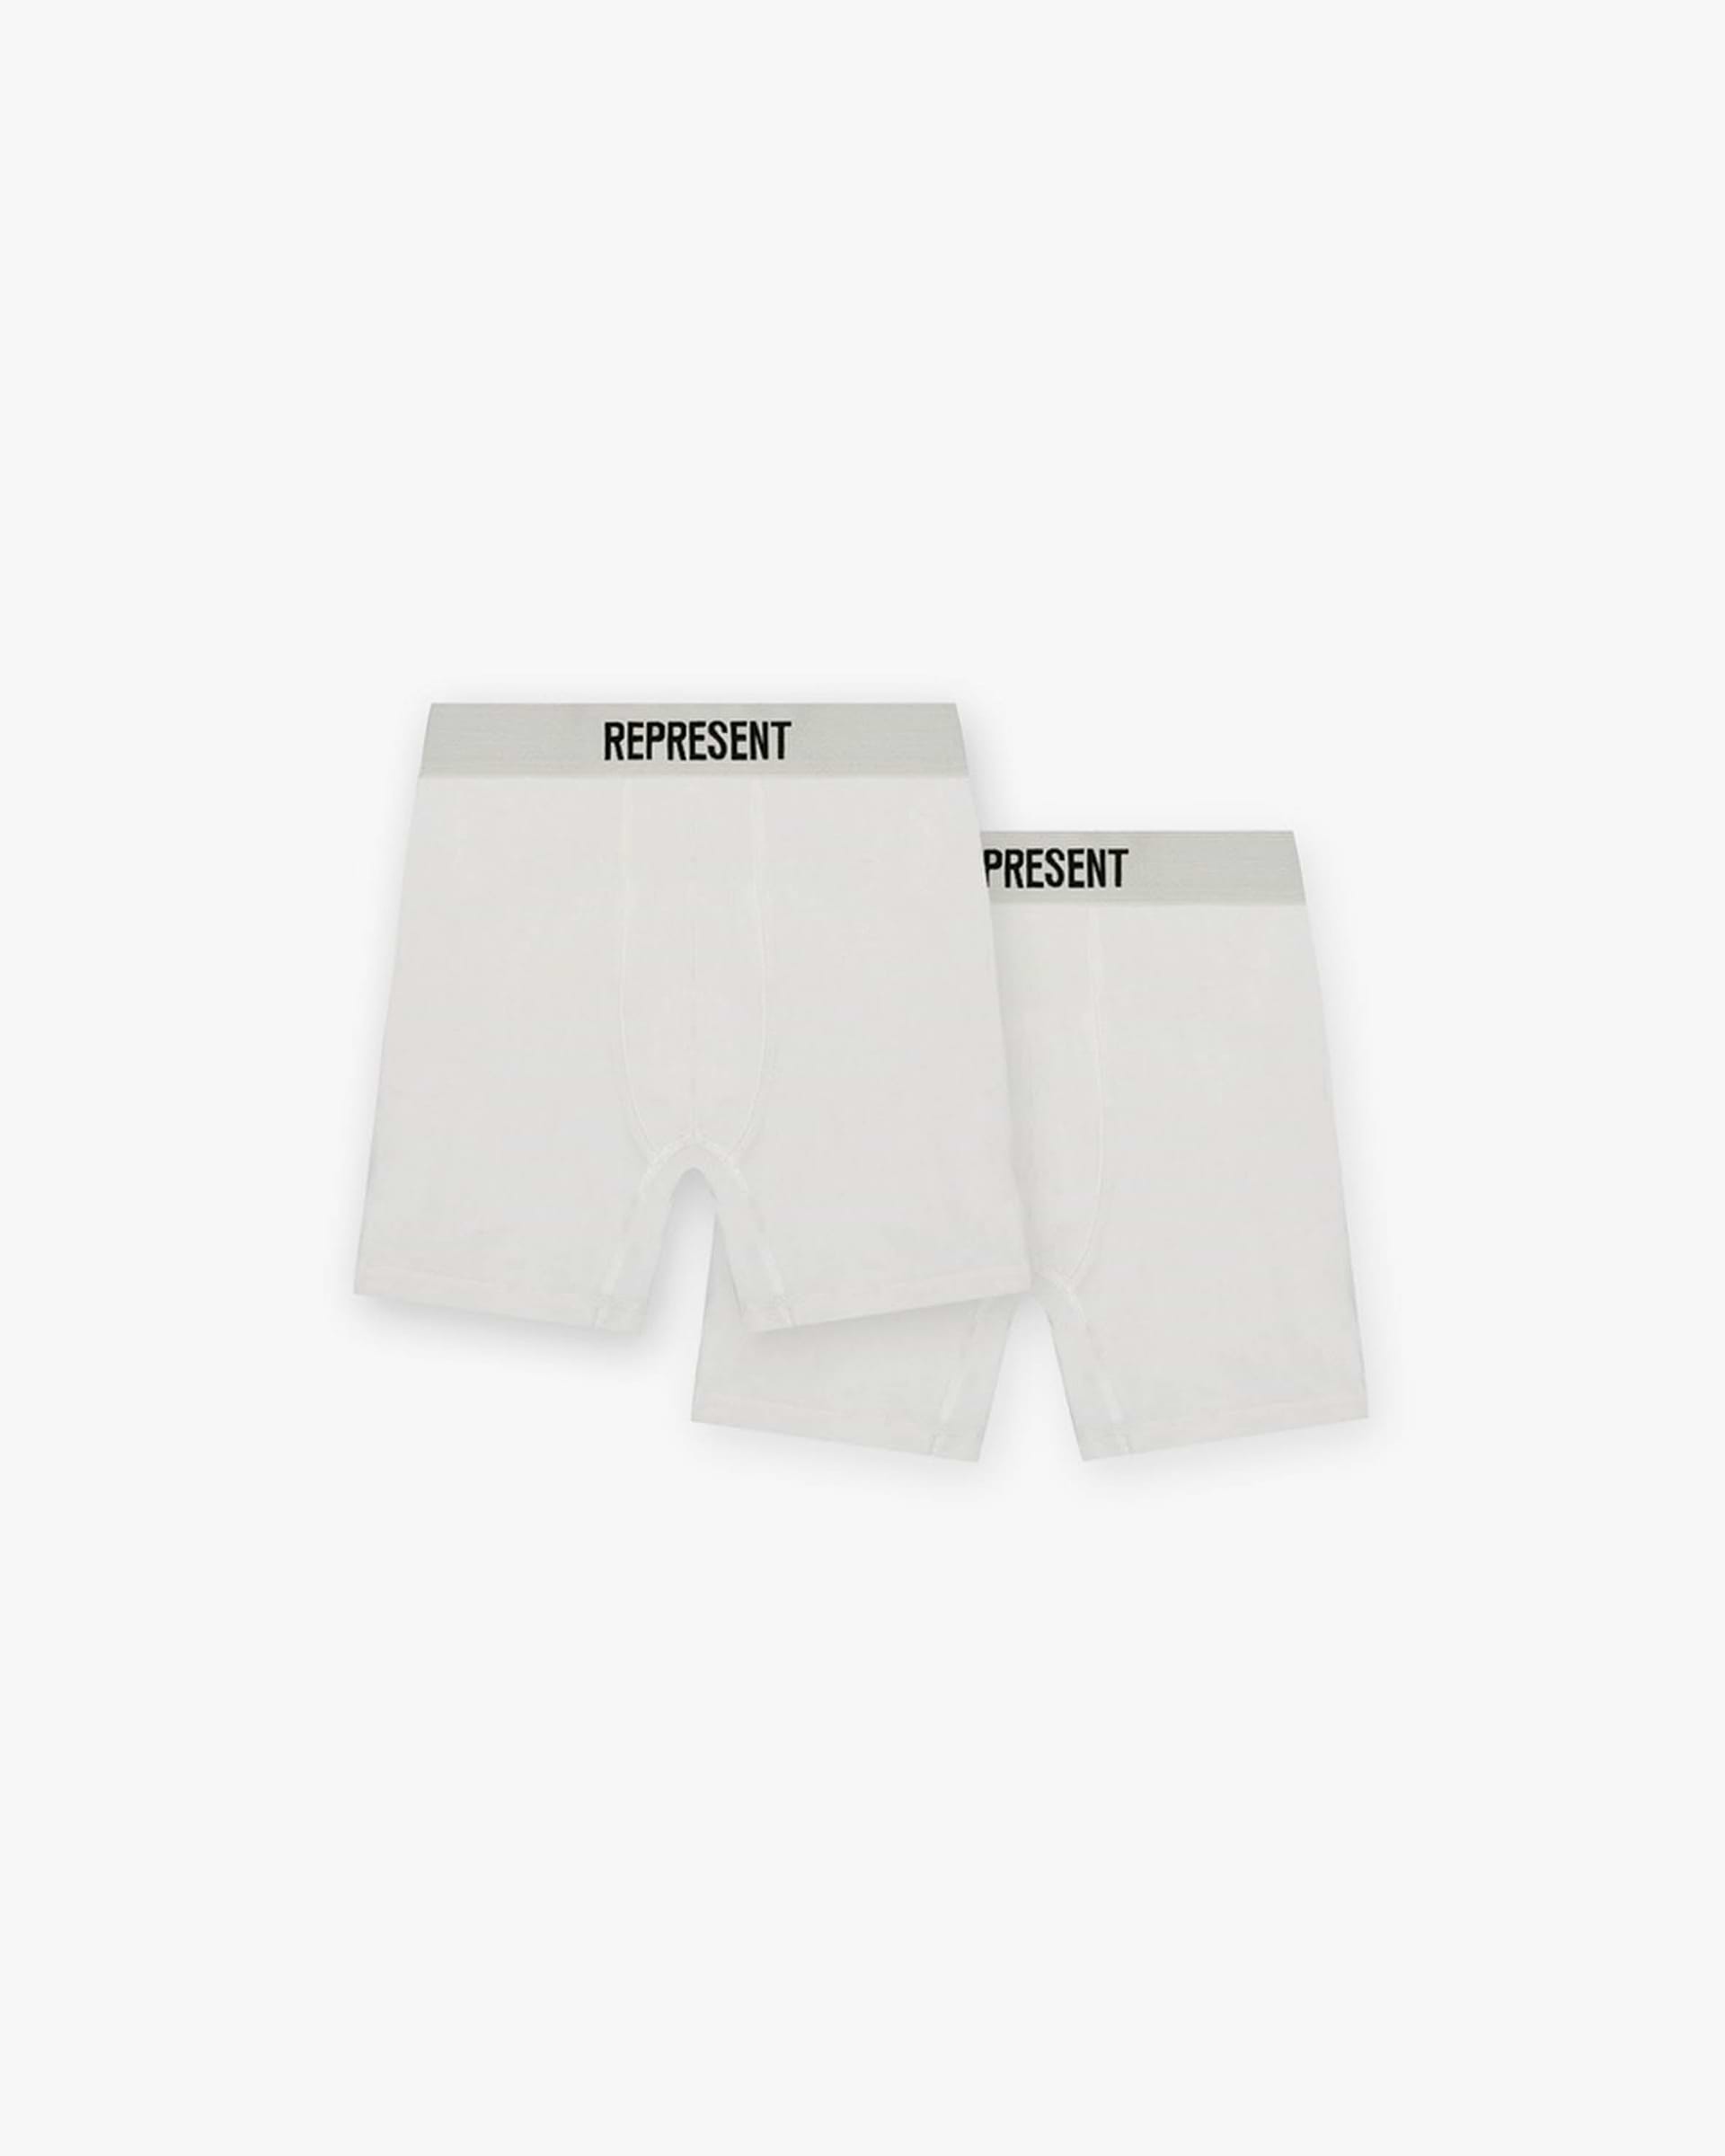 Represent Boxers 2 Pack | Flat White Accessories FW22 | Represent Clo